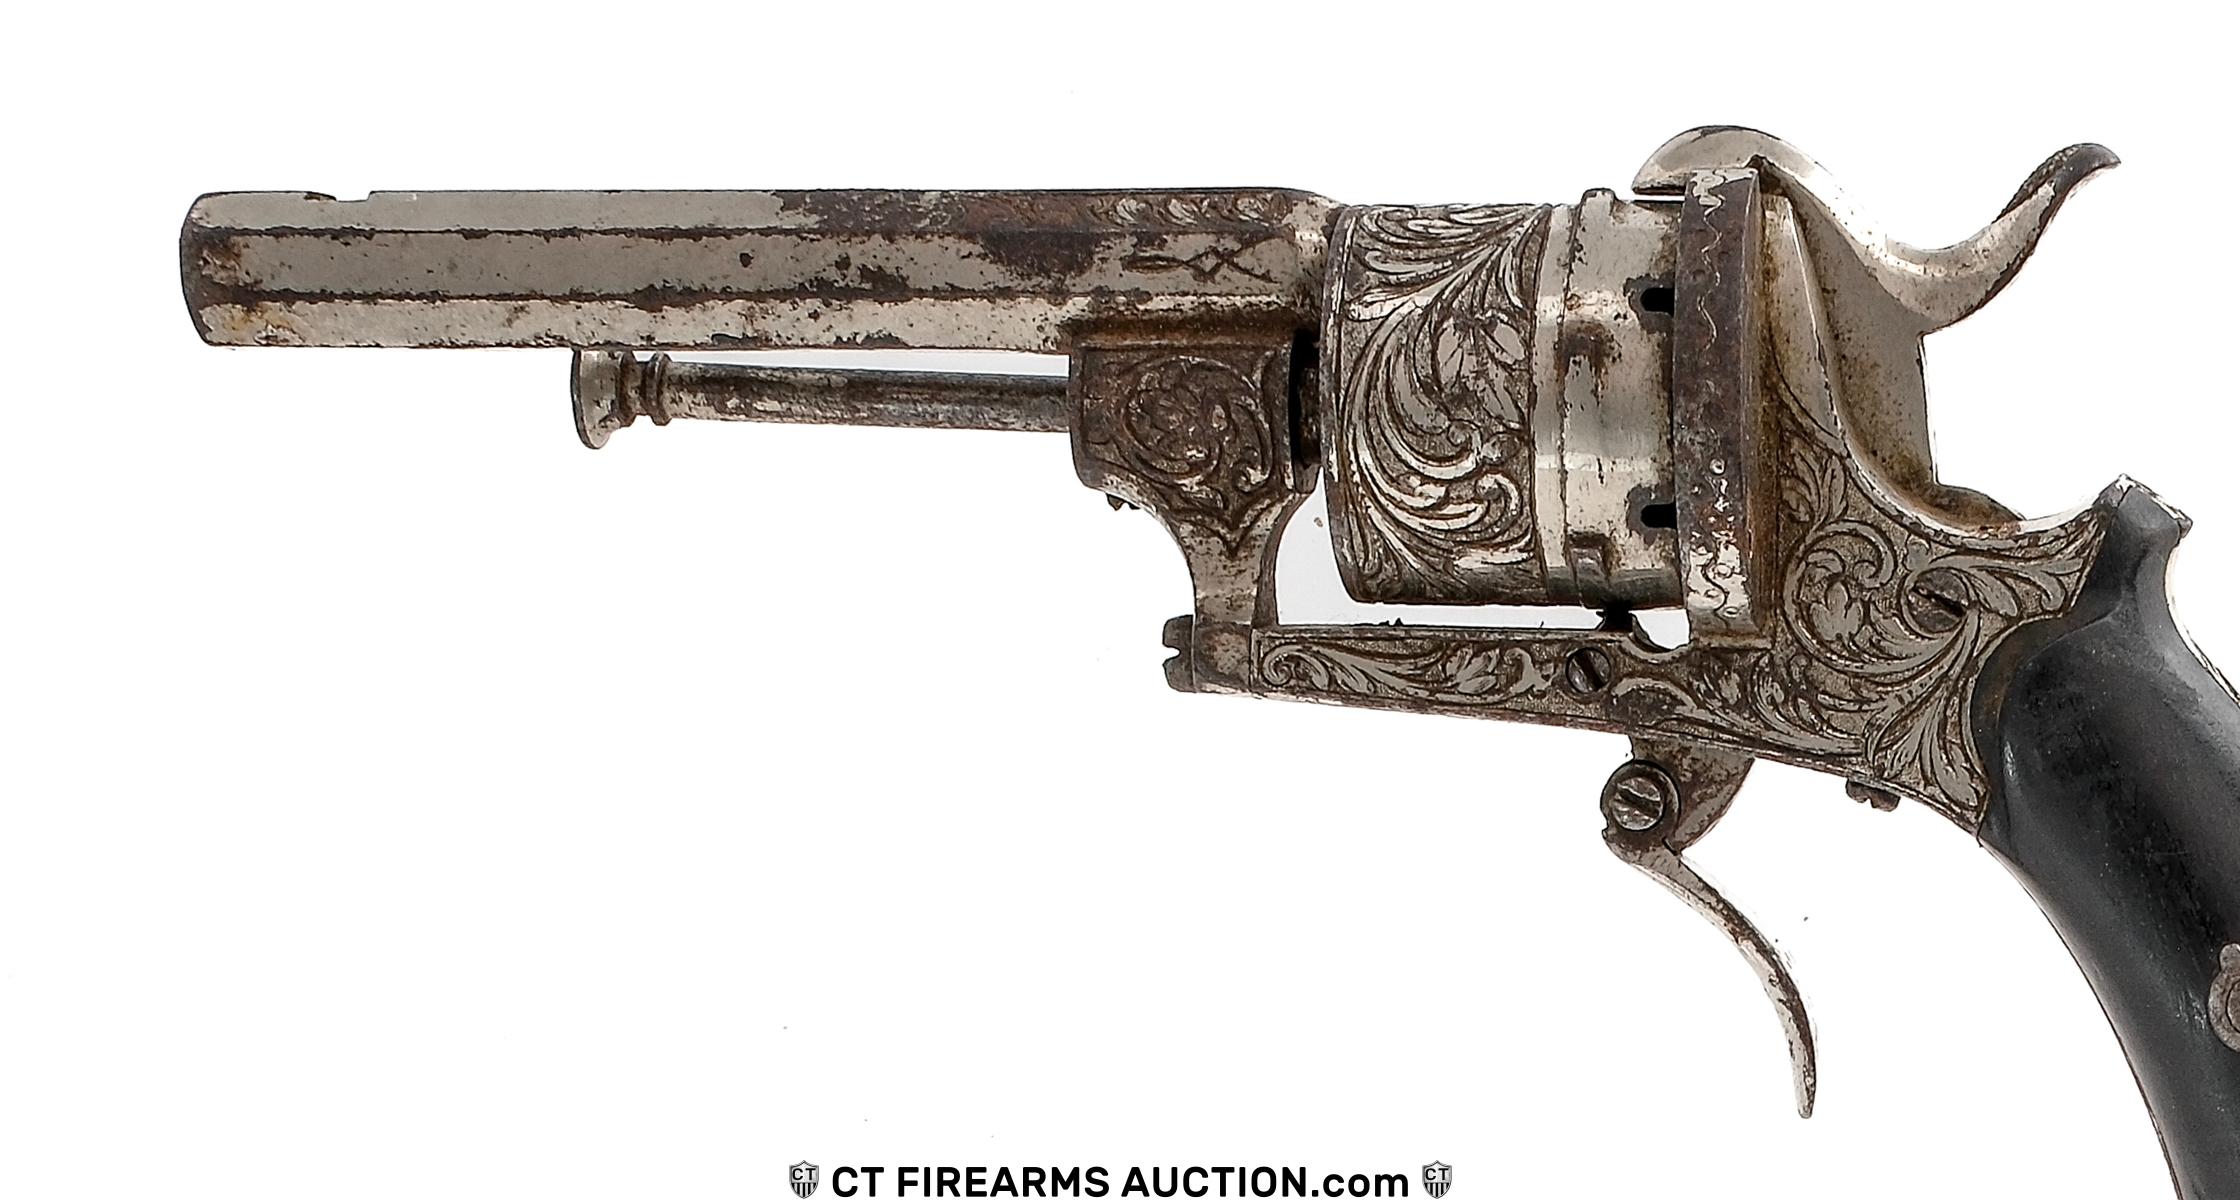 Belgian Pinfire 7.5mm Revolver